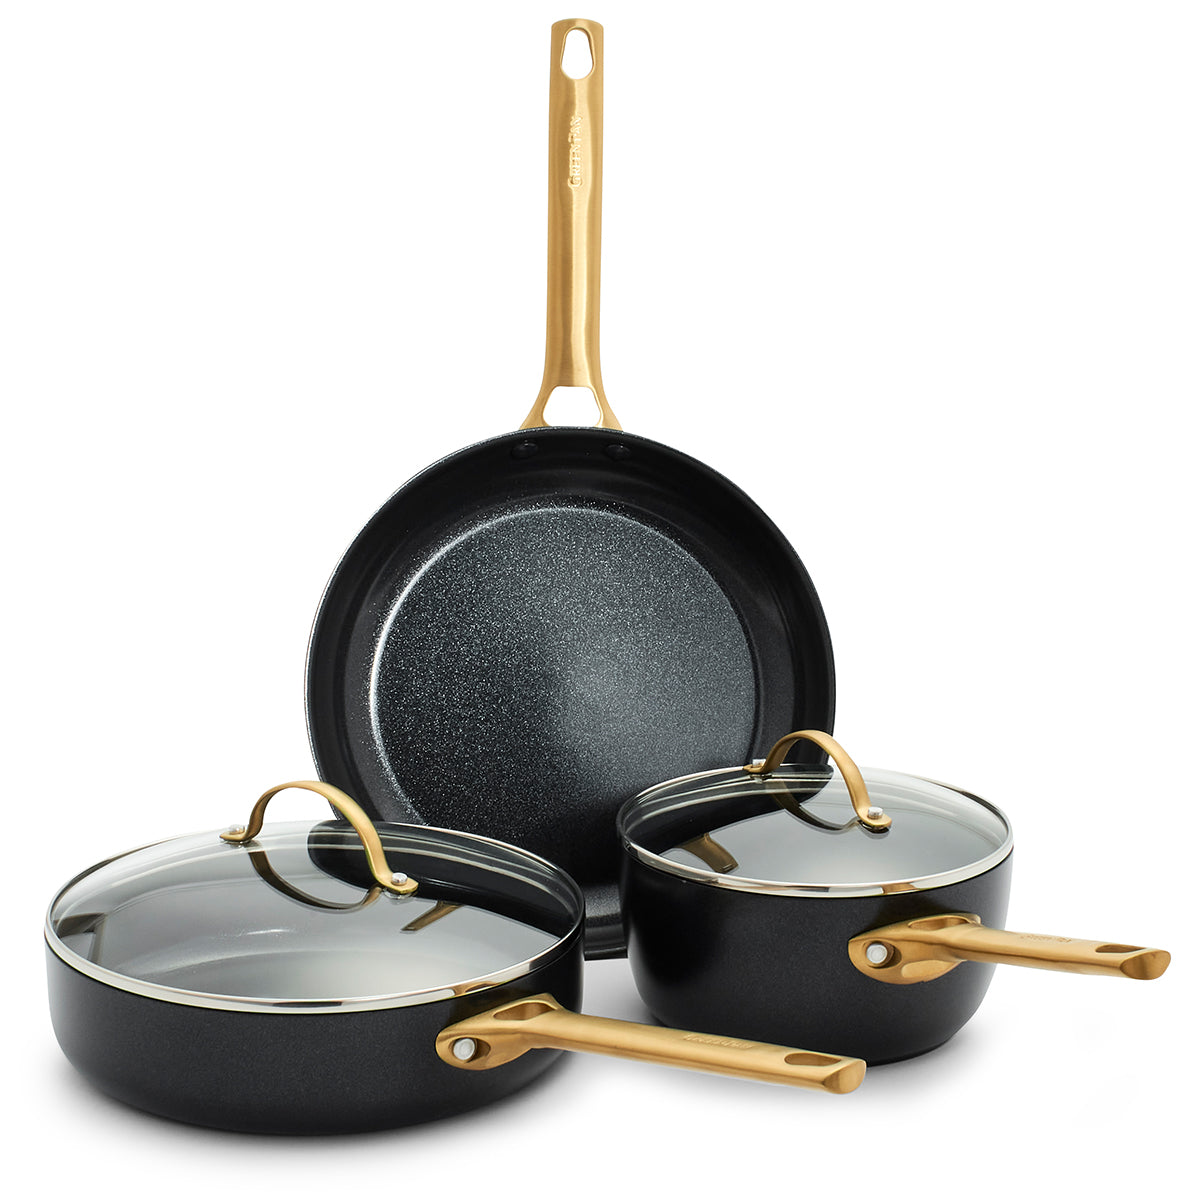 Pots and Pans Sets, Nonstick Cookware Set, Induction Pan Set, Chemical-Free Kitchen Sets, Saucepan, Frying Pan, Saute Pan, Black, 9 Pieces